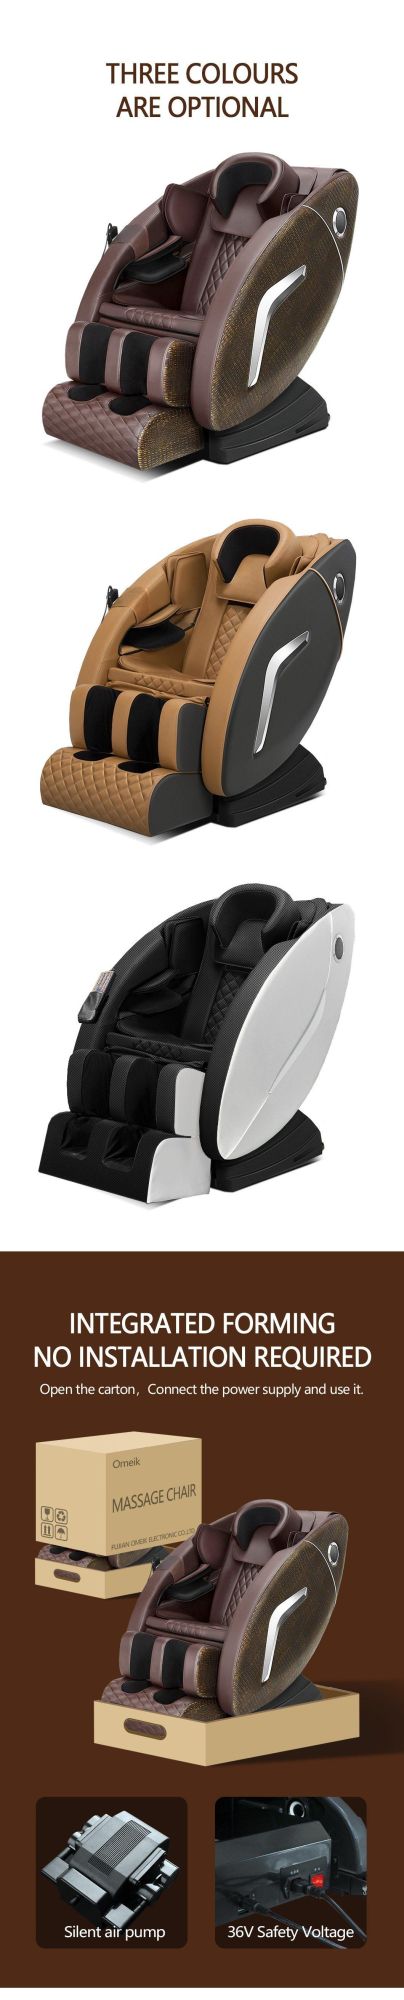 Commercial Massage Equipment Full Body Shiatsu Massage Chair with Zero Gravity